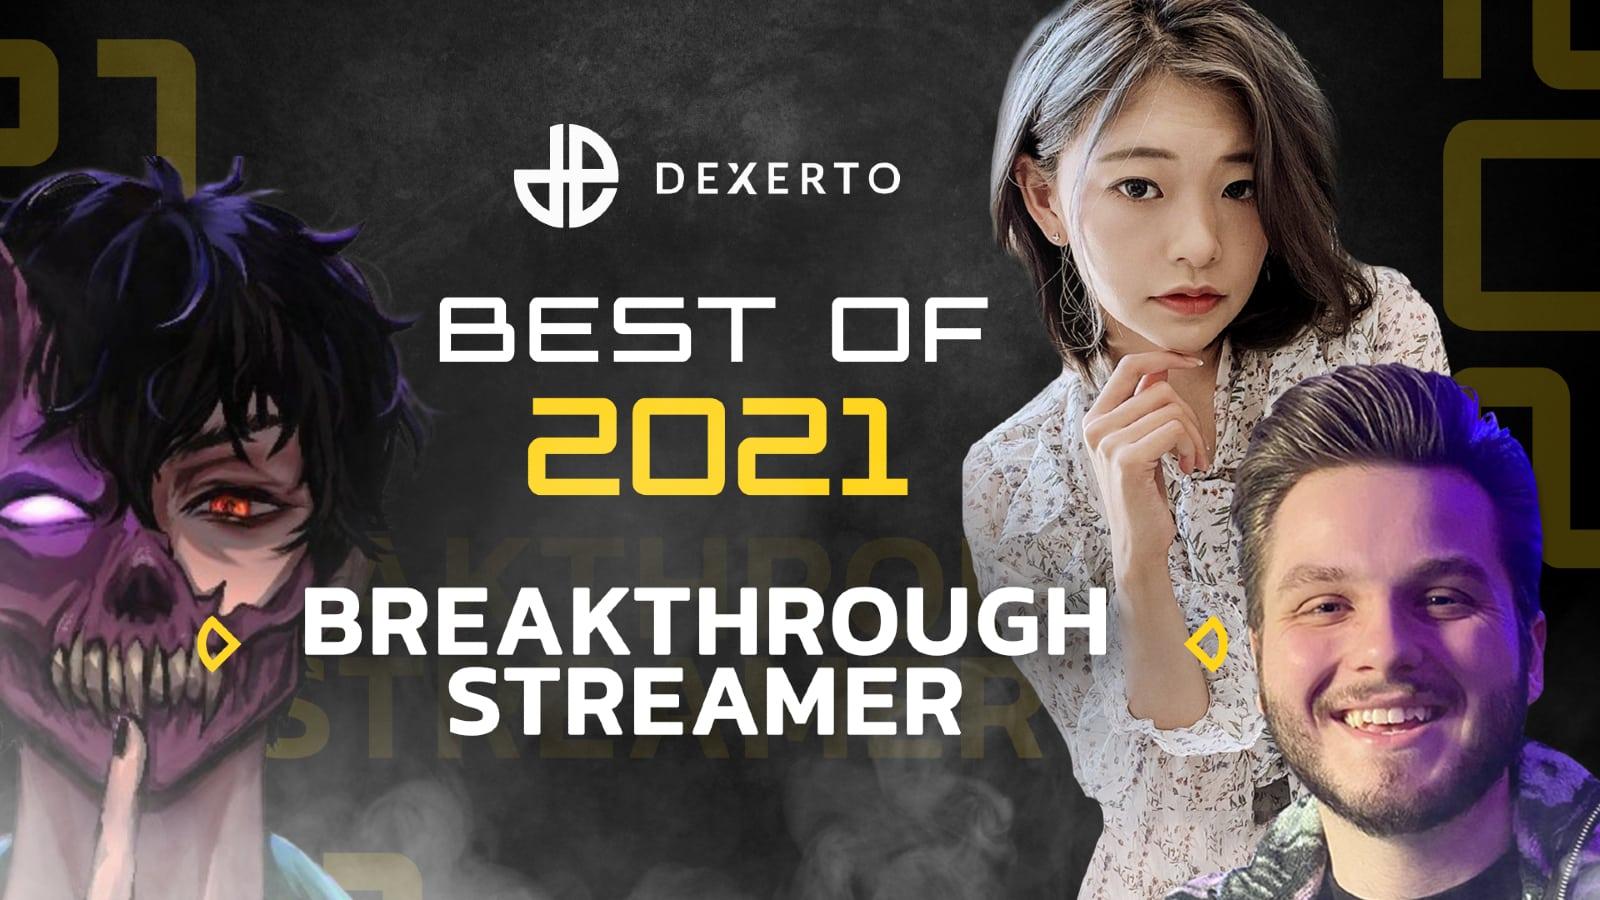 Best breakthrough streamers 2021